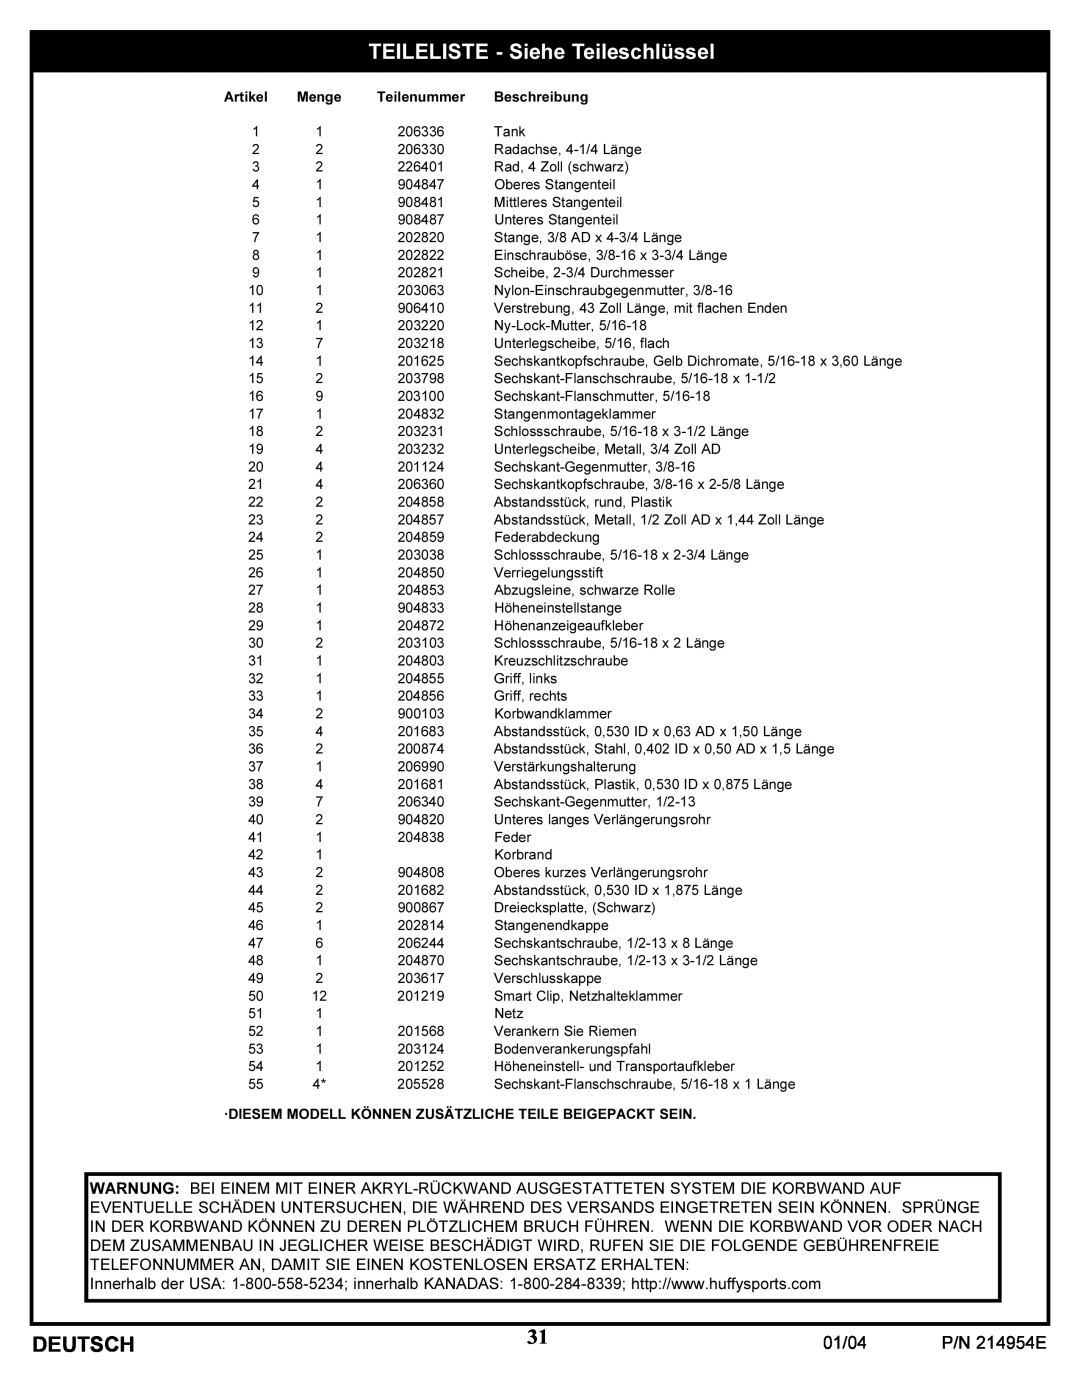 Huffy ATVUSB05 manual TEILELISTE - Siehe Teileschlüssel, Sechskantkopfschraube, Gelb Dichromate, 5/16-18 x 3,60 Länge 